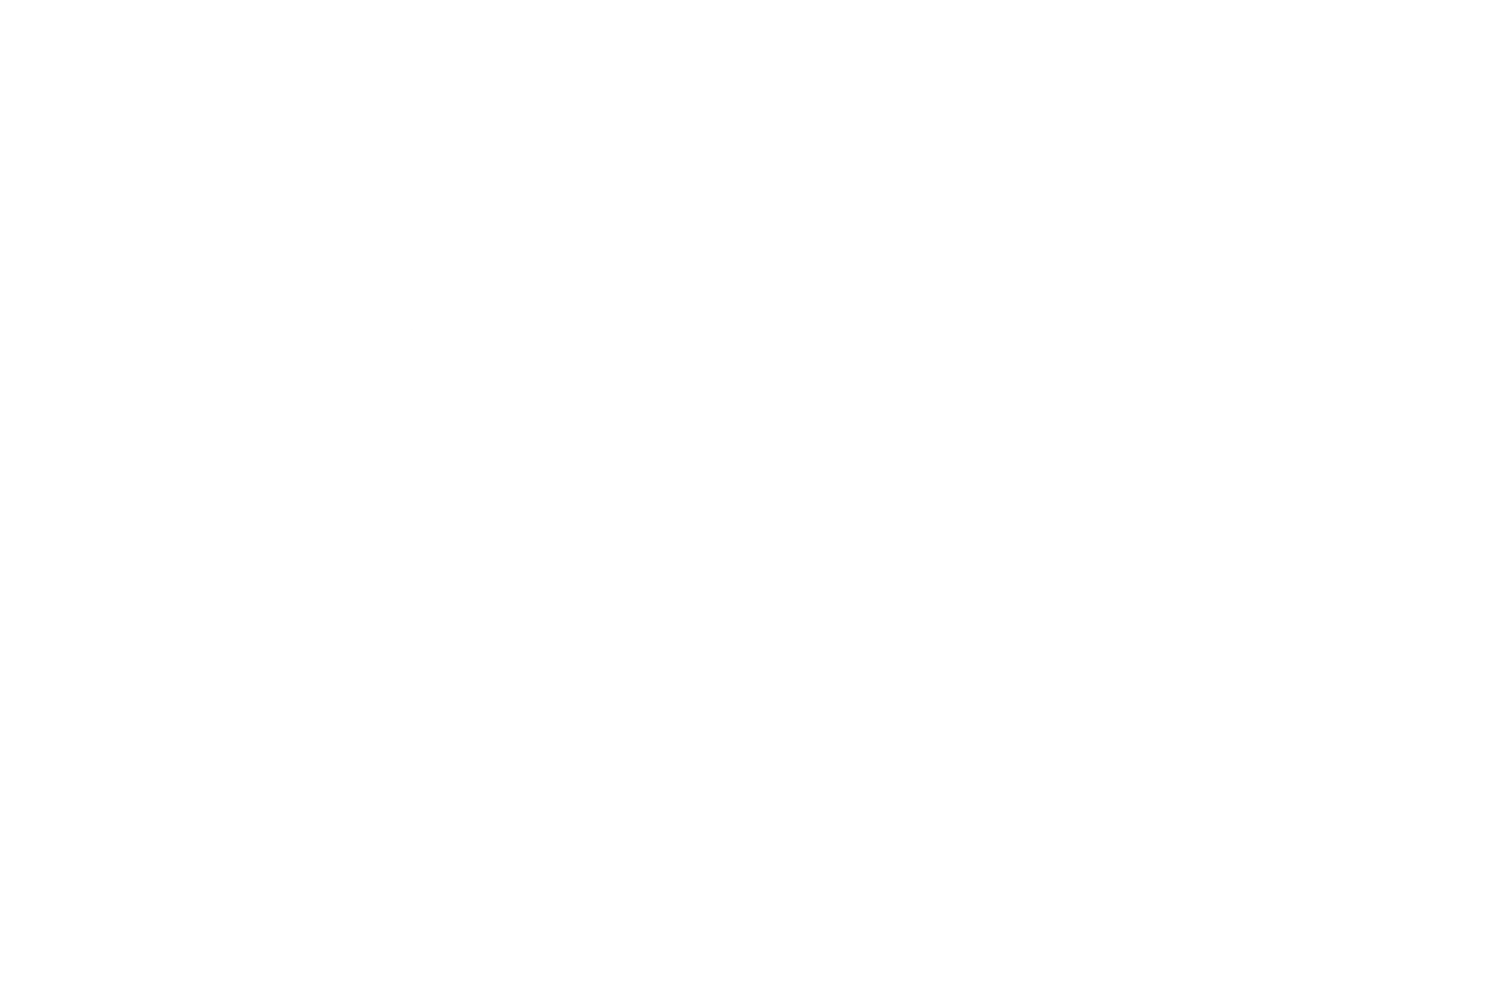 CJ Smith Photography